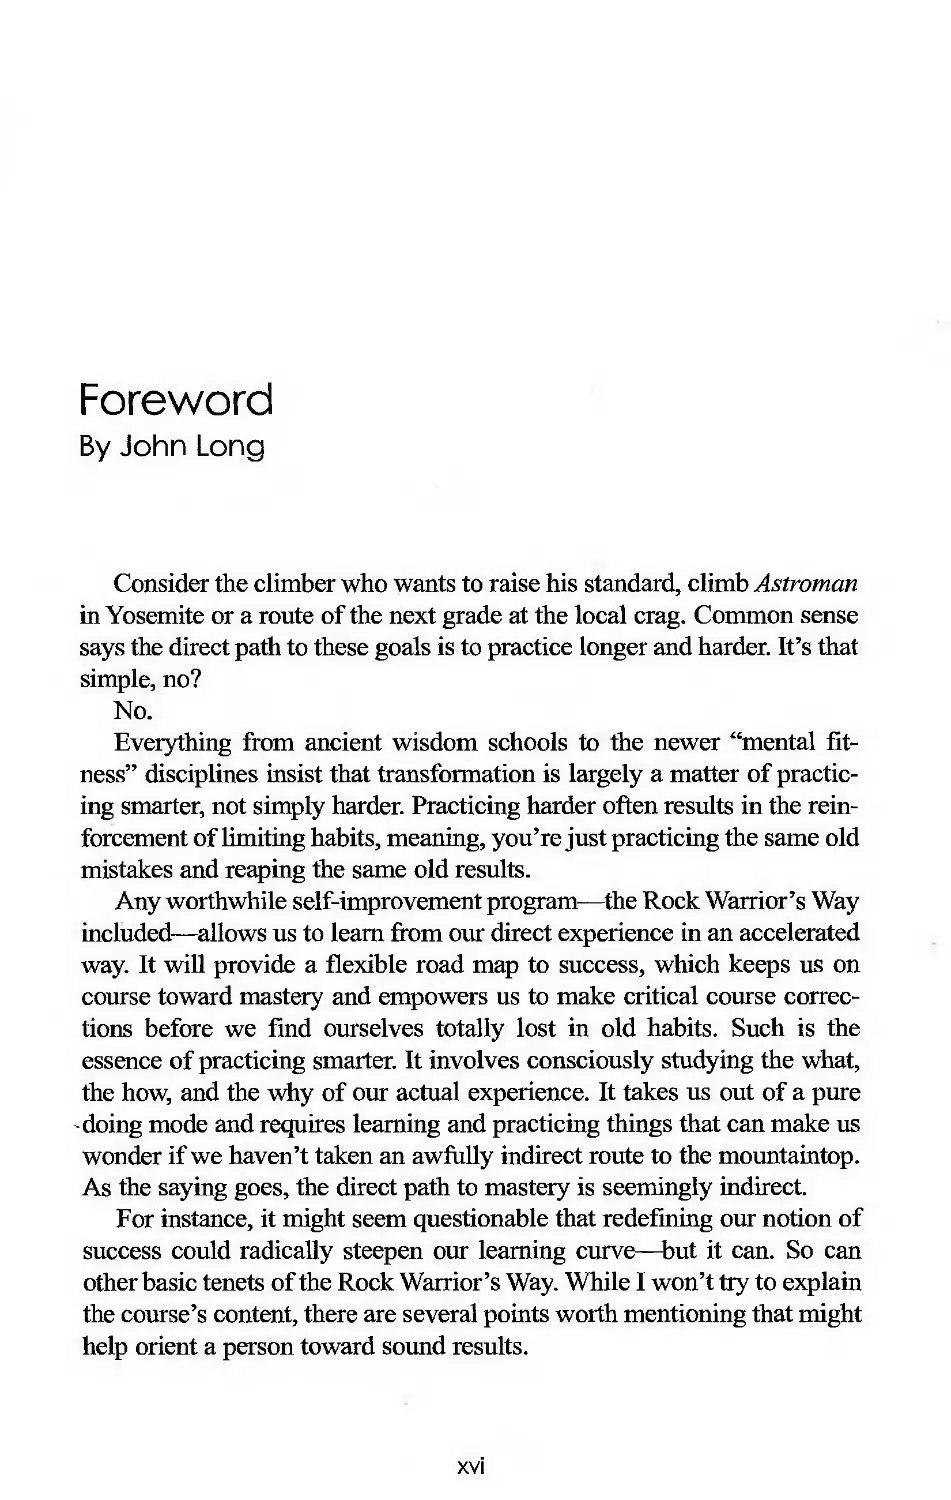 Foreword, by John Long